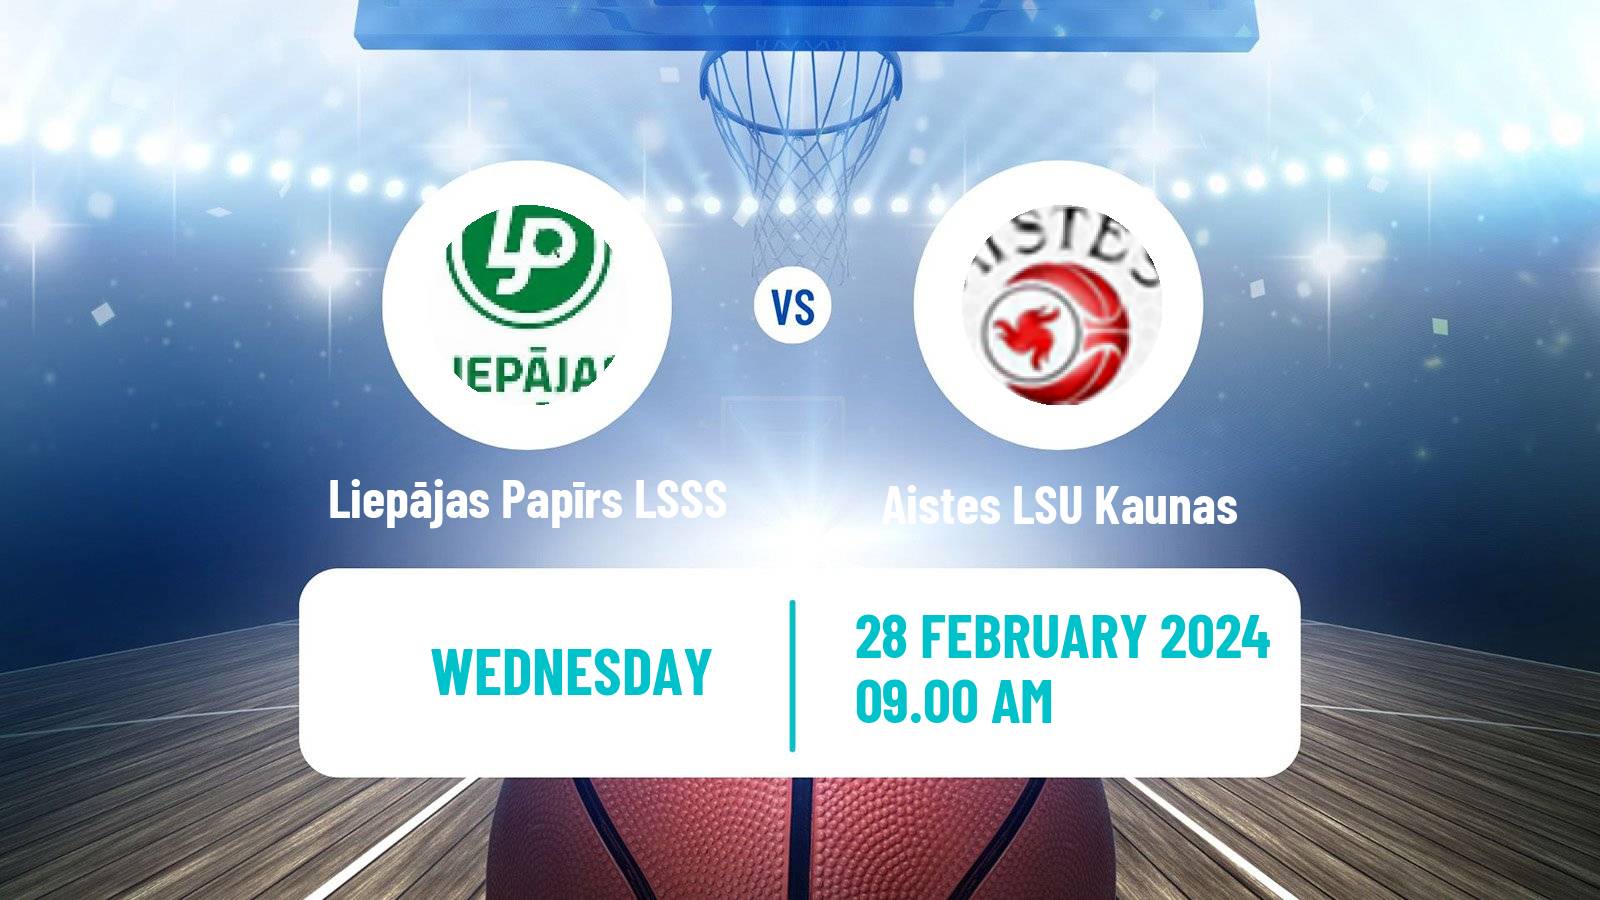 Basketball WBBL Liepājas Papīrs LSSS - Aistes LSU Kaunas